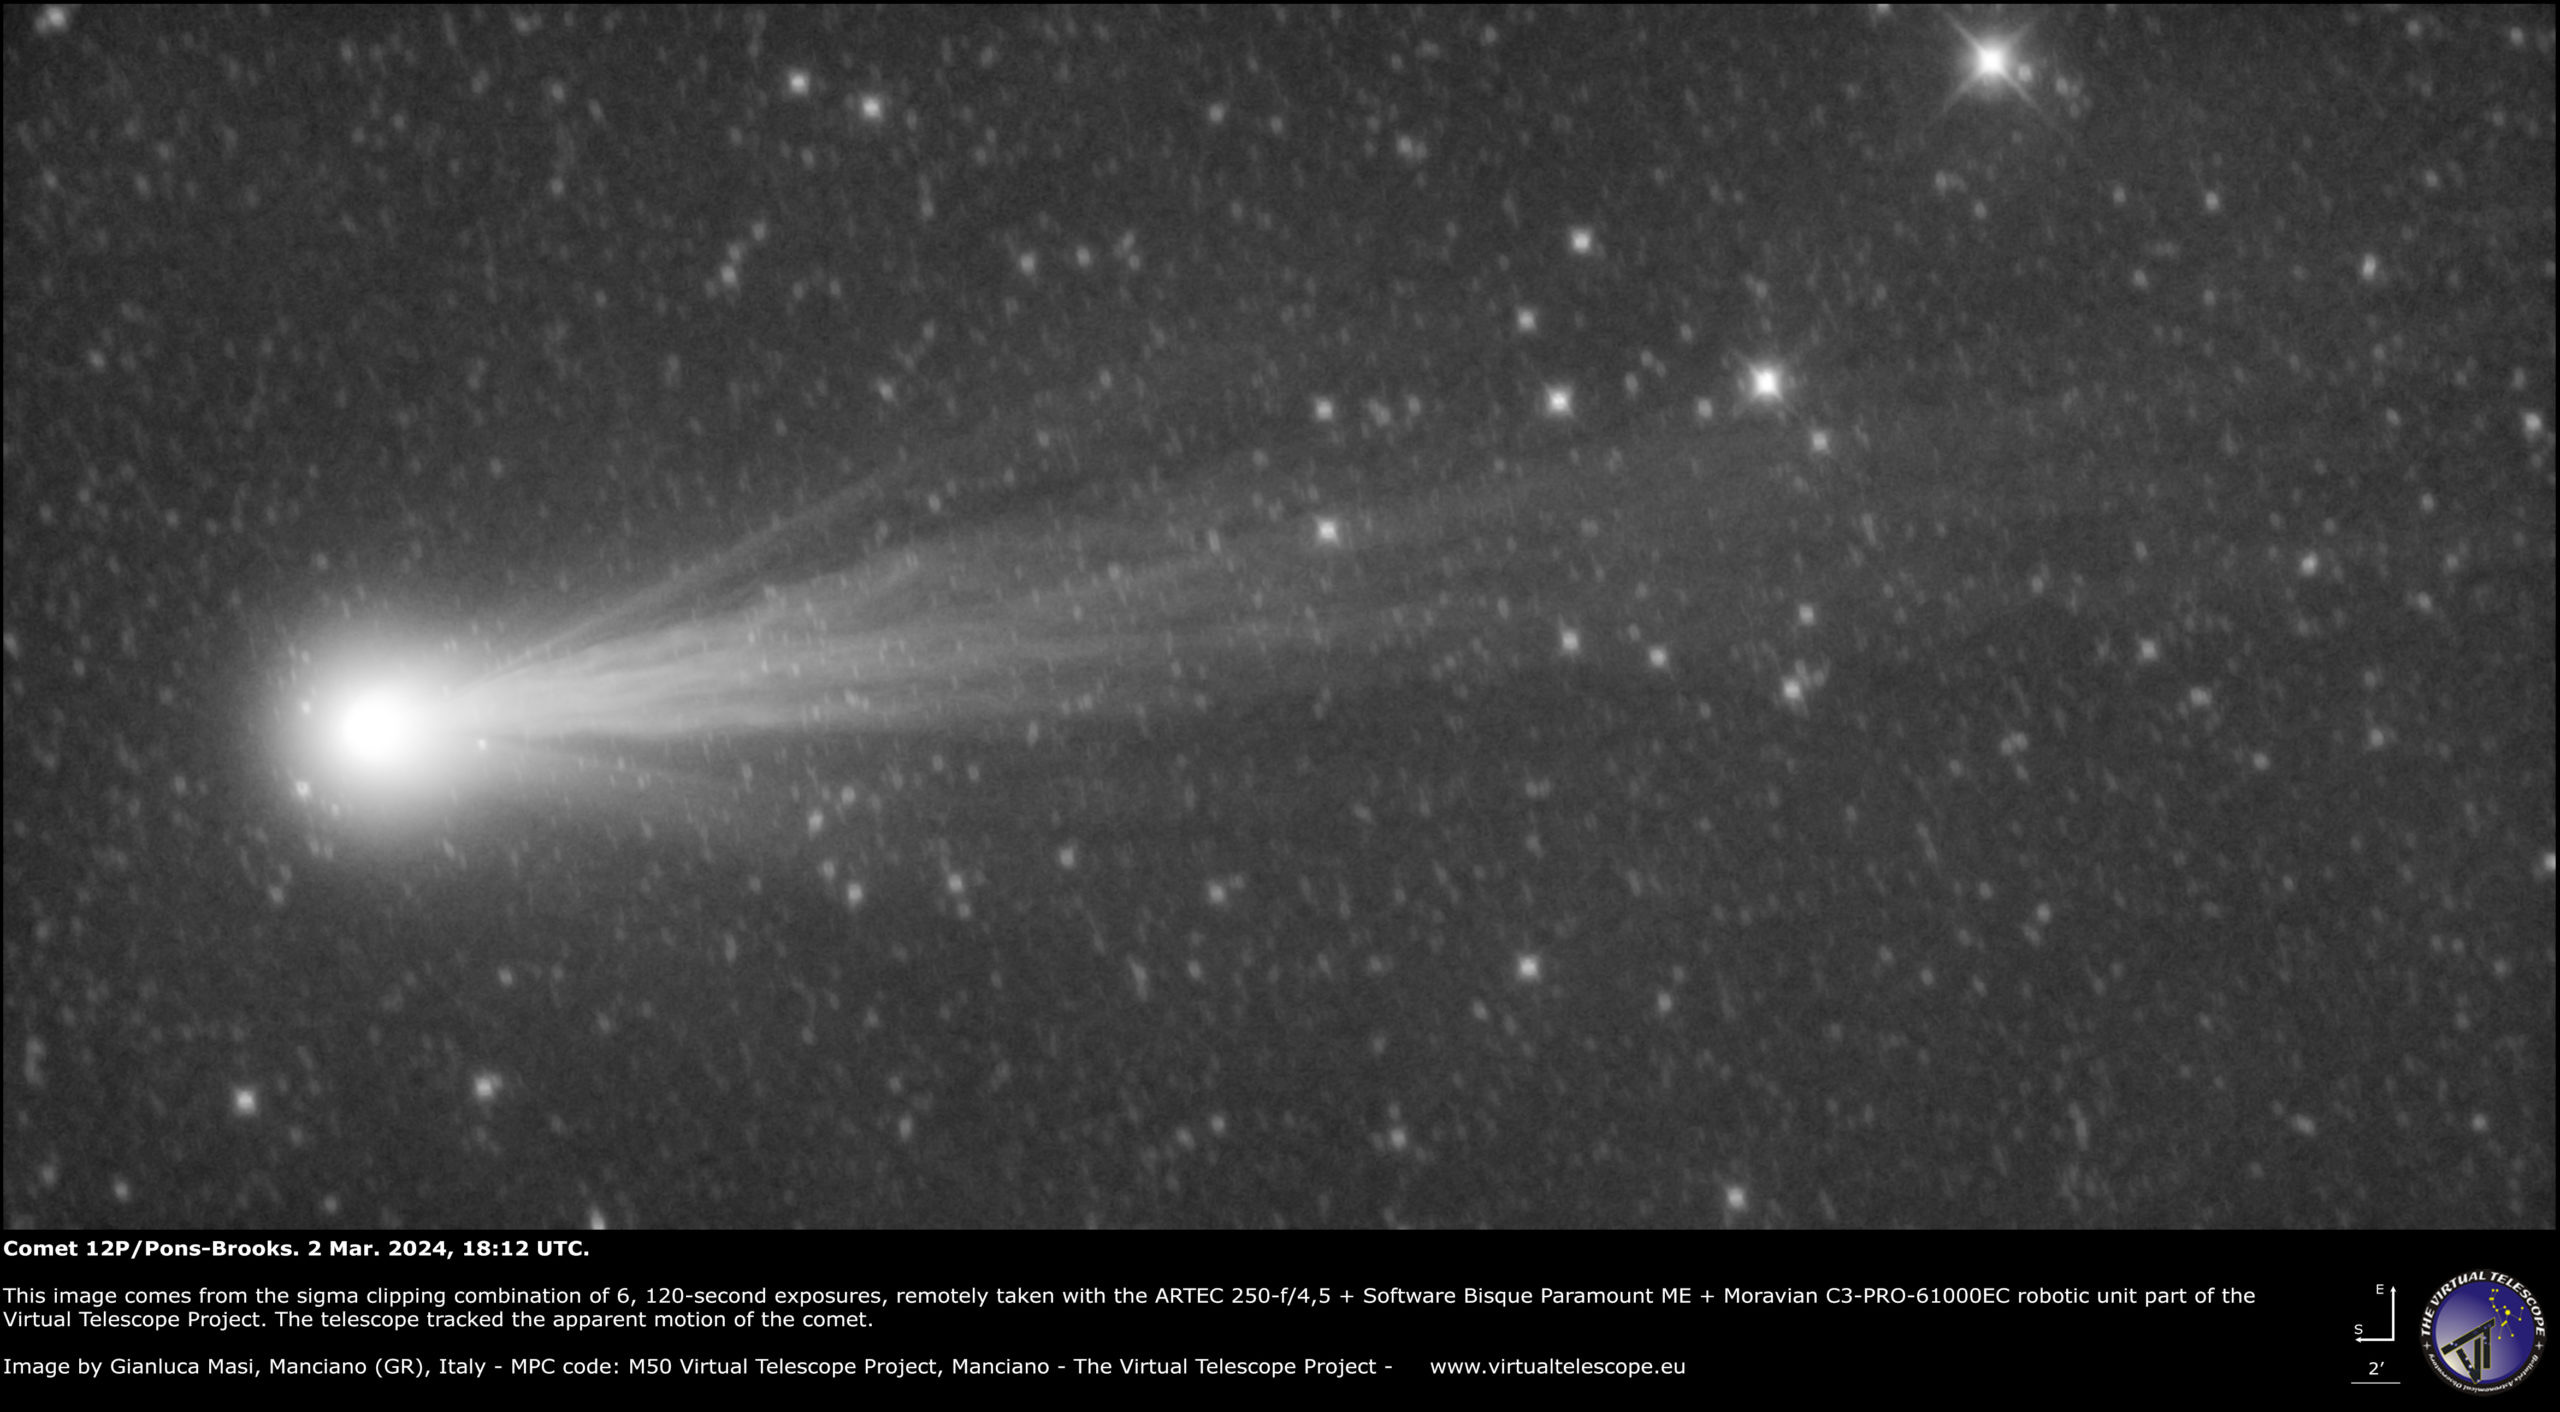 Comet 12P/Pons-Brooks: 2 Mar. 2024.